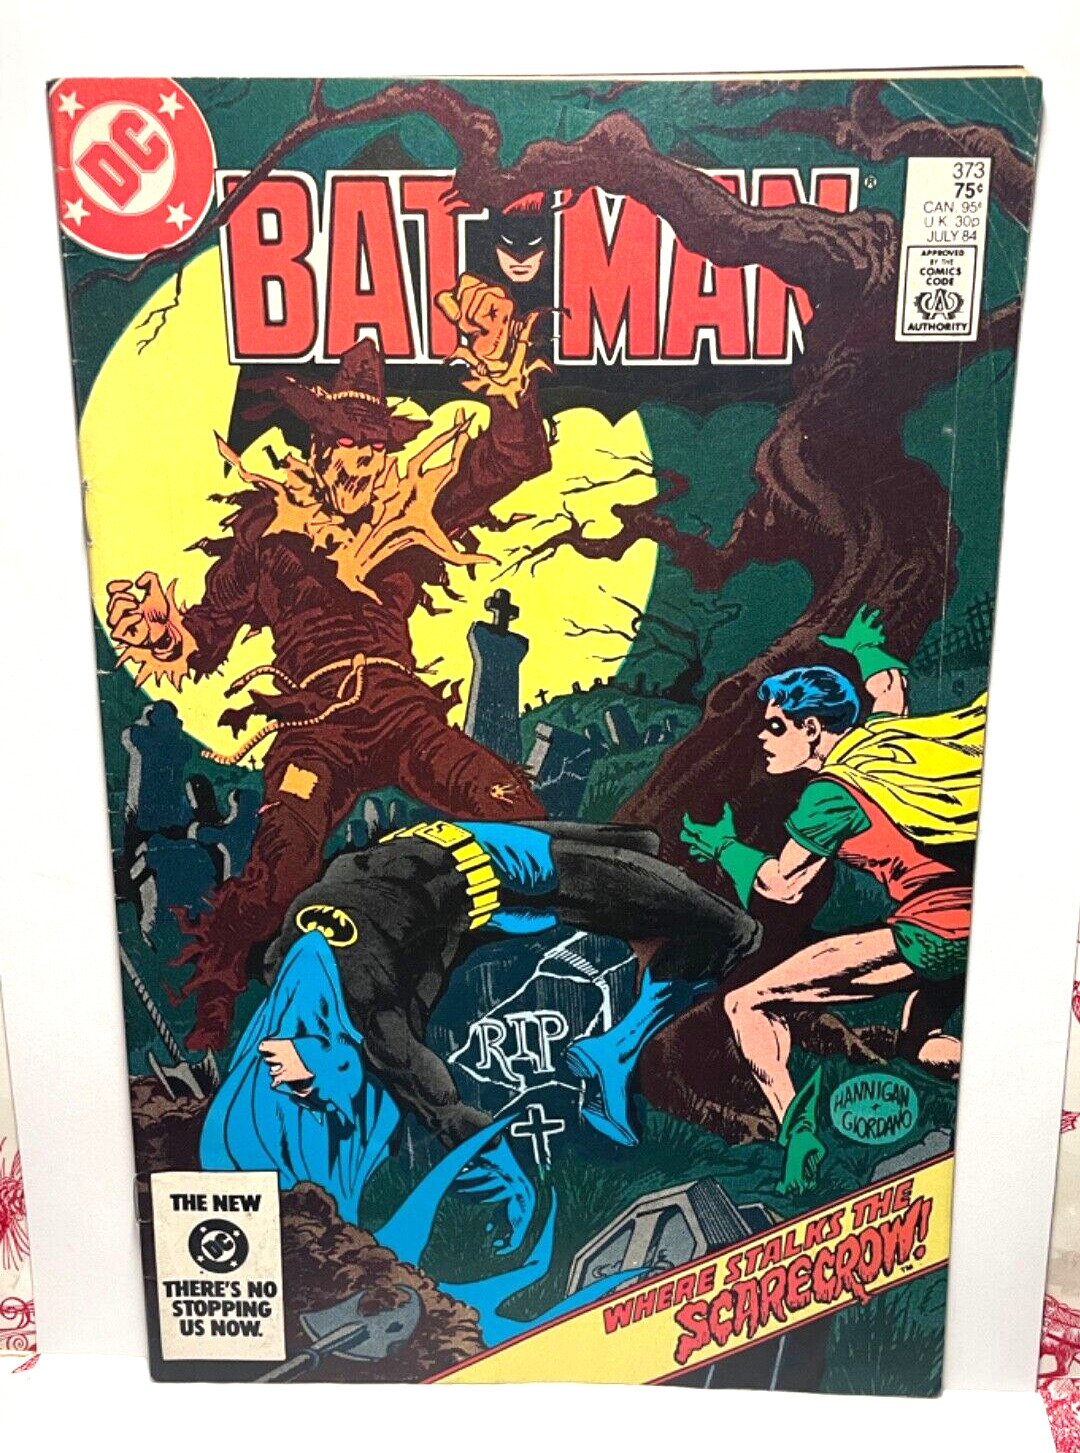 Vintage DC Comic Book BATMAN 373 Origin of SCARECROW 1984 Iconic Cover Robin